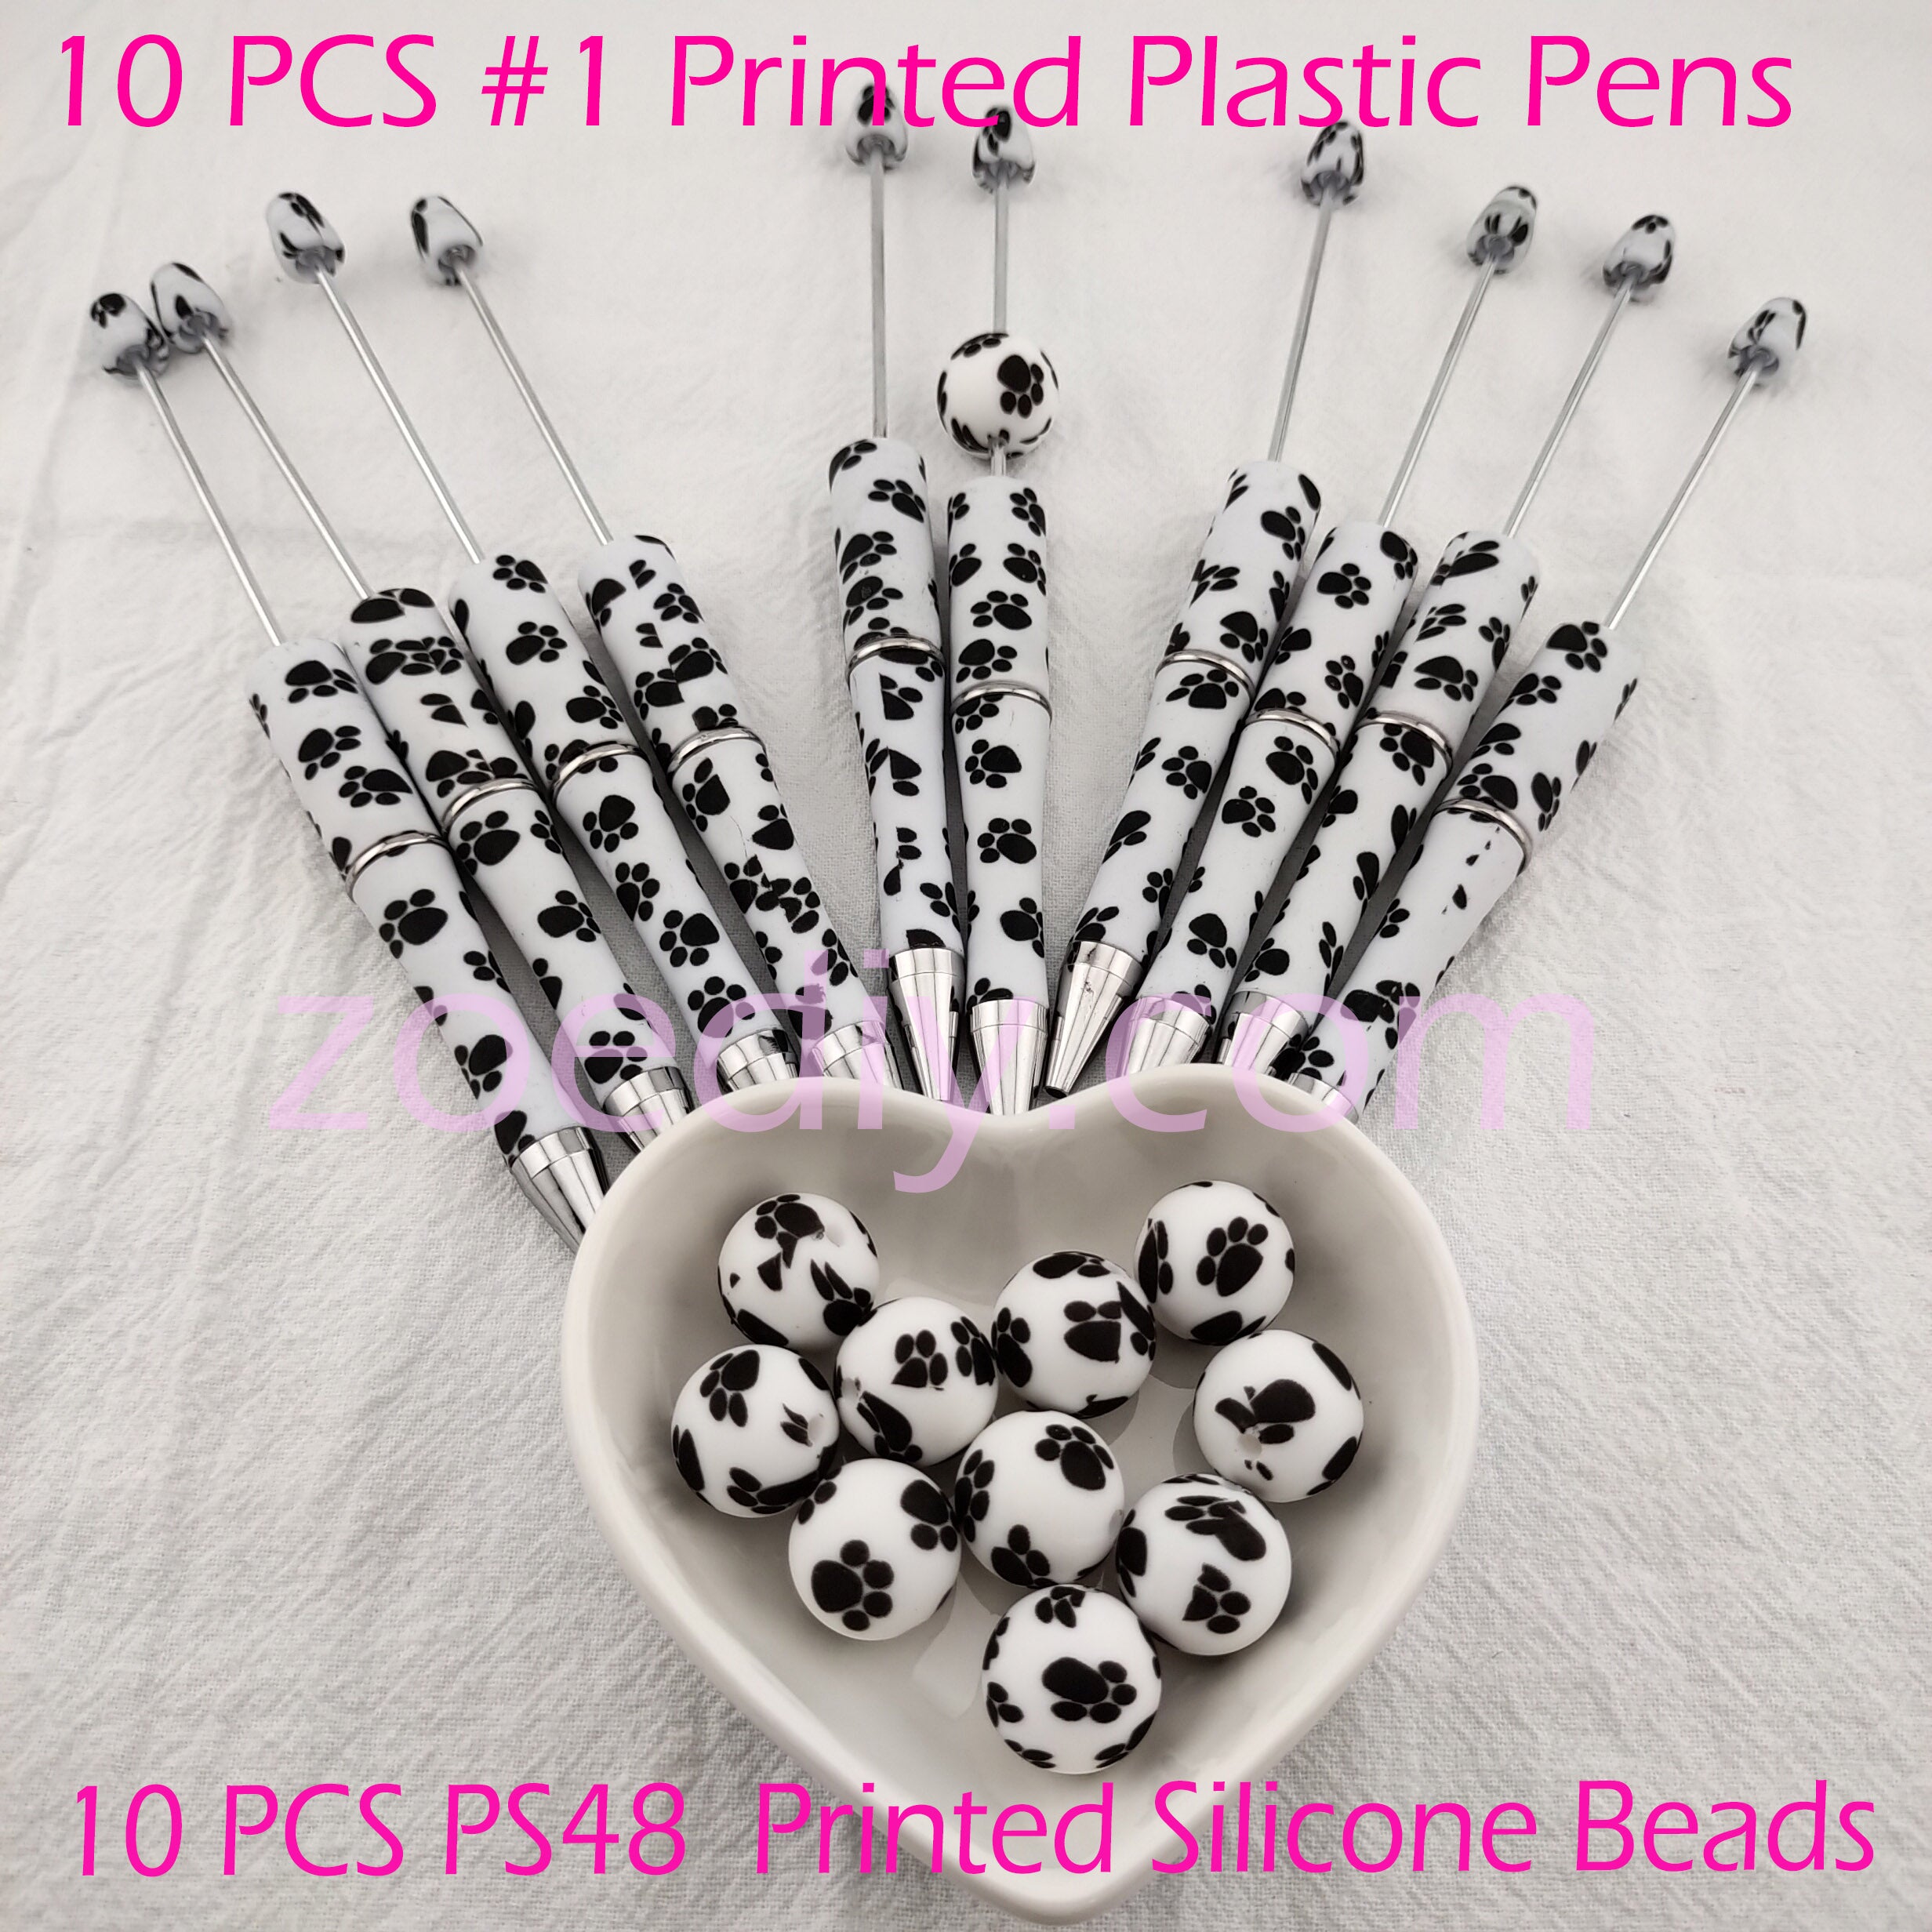 10 PCS Dog Paw #1 Printed Plastic Pens + 10 PCS PS48 Printed Silicone Beads SET